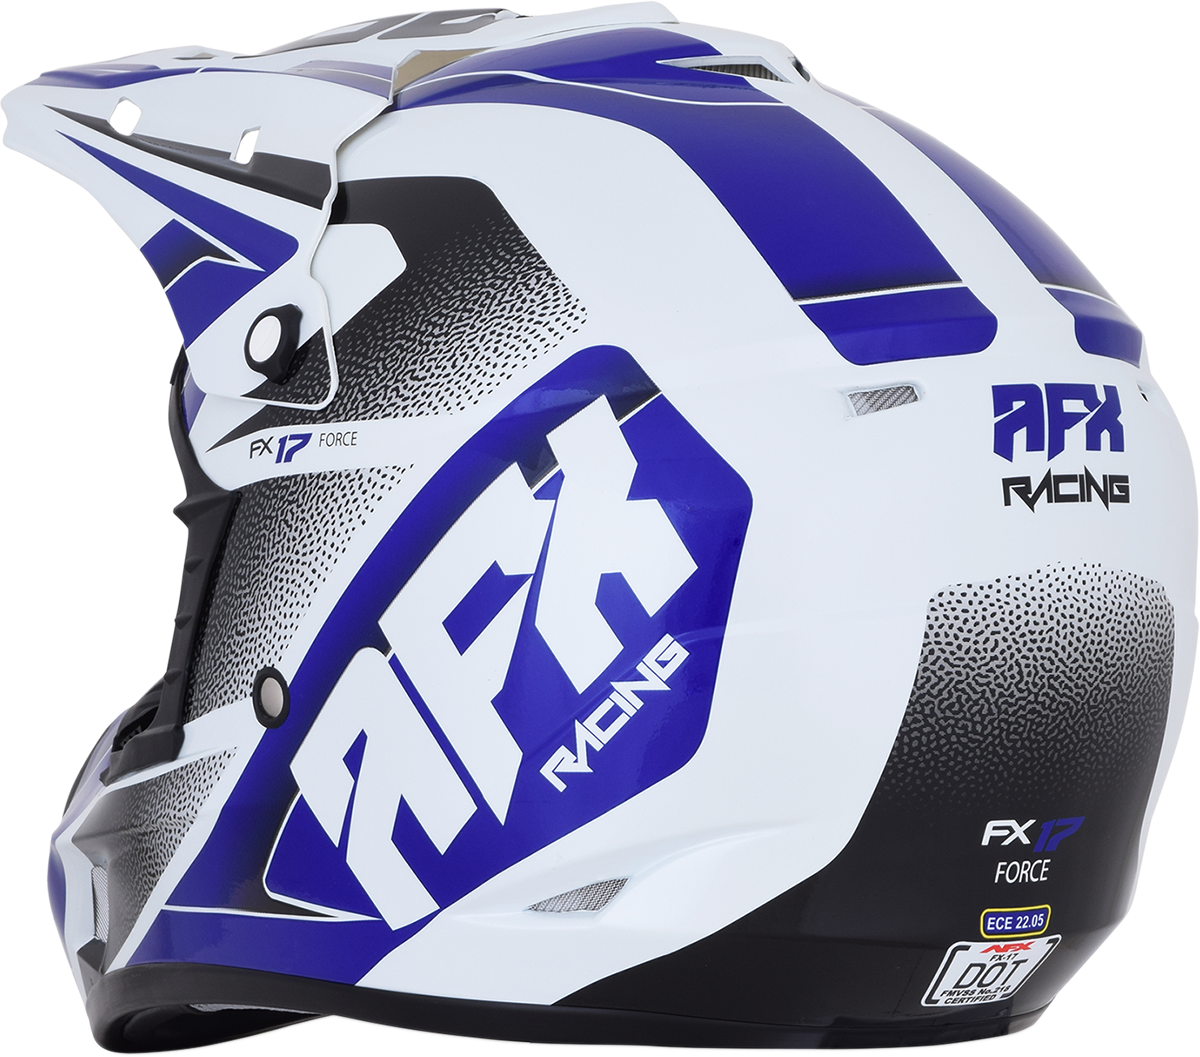 AFX FX-17 Helmet - Force - Pearl White/Blue - XS 0110-5237